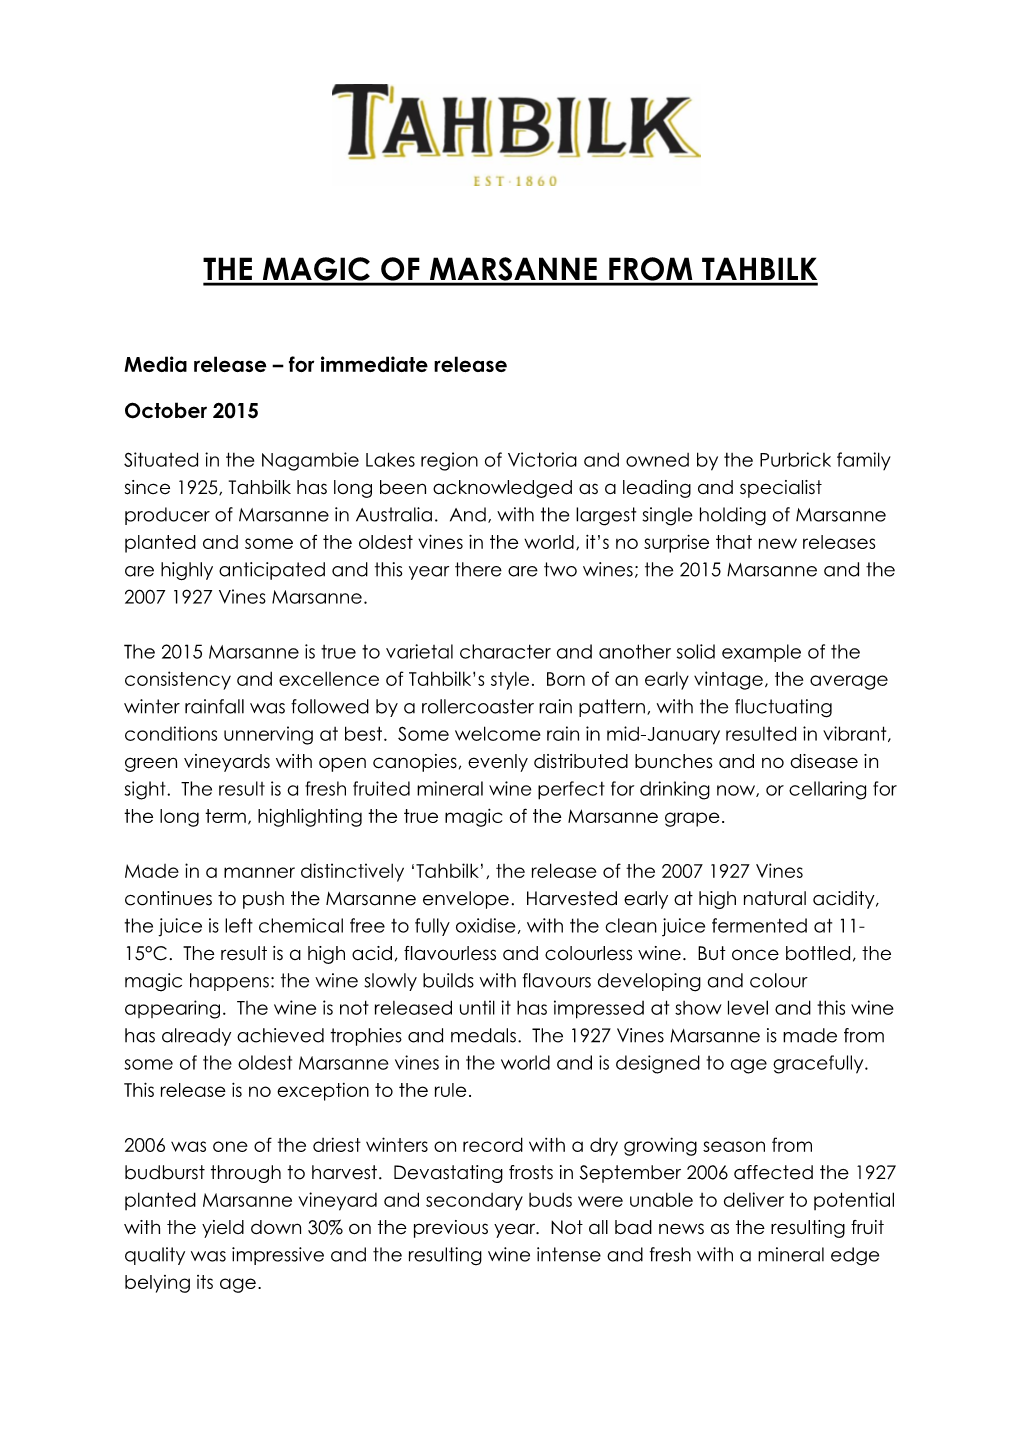 The Magic of Marsanne from Tahbilk